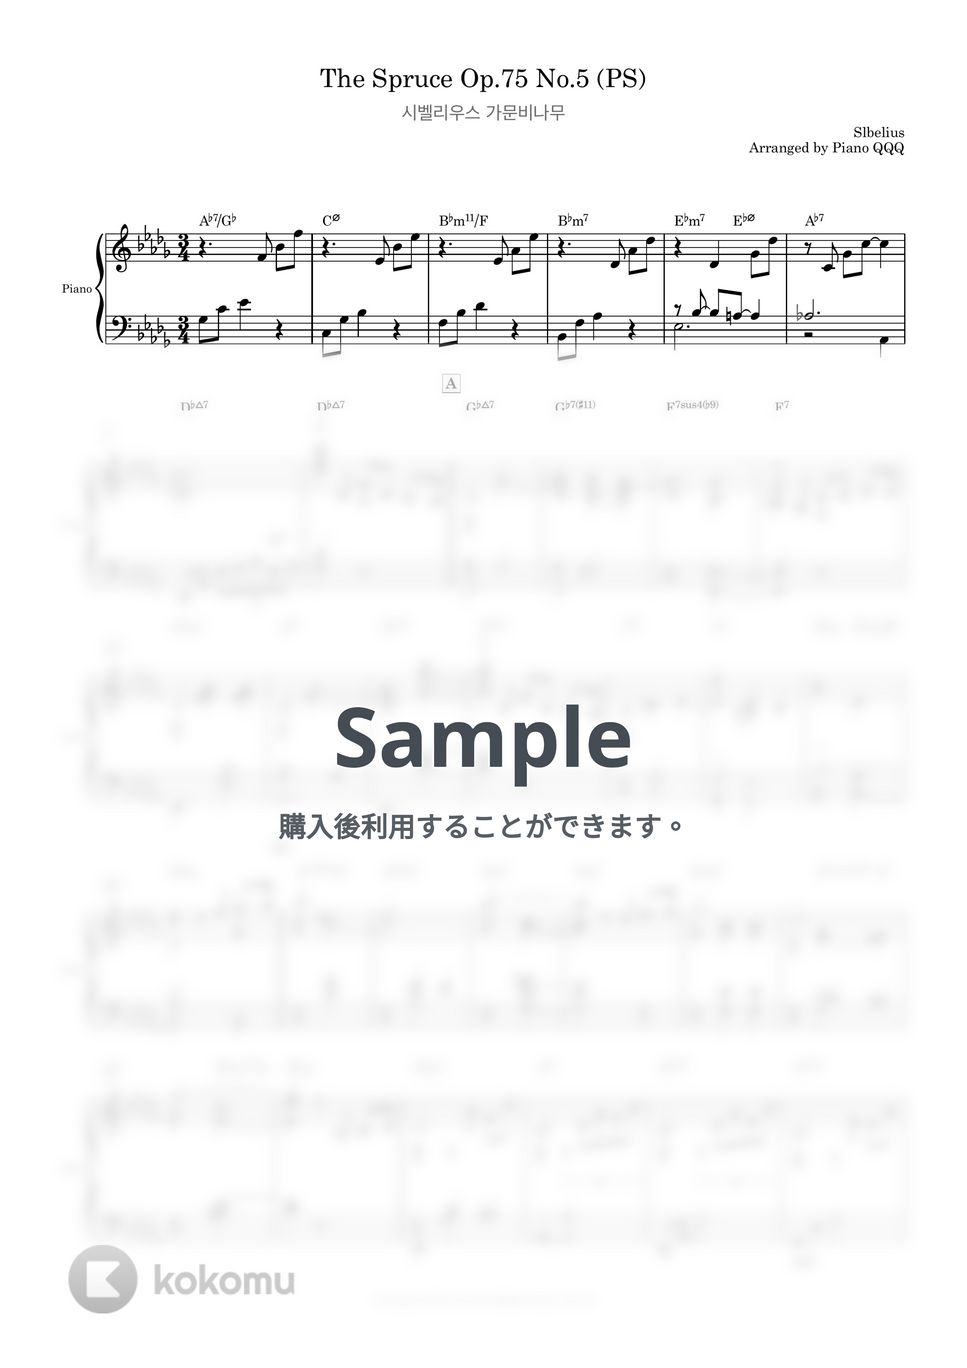 Jean Sibelius - The Spruce Pine (ピアノ ソロ楽譜) by Piano QQQ